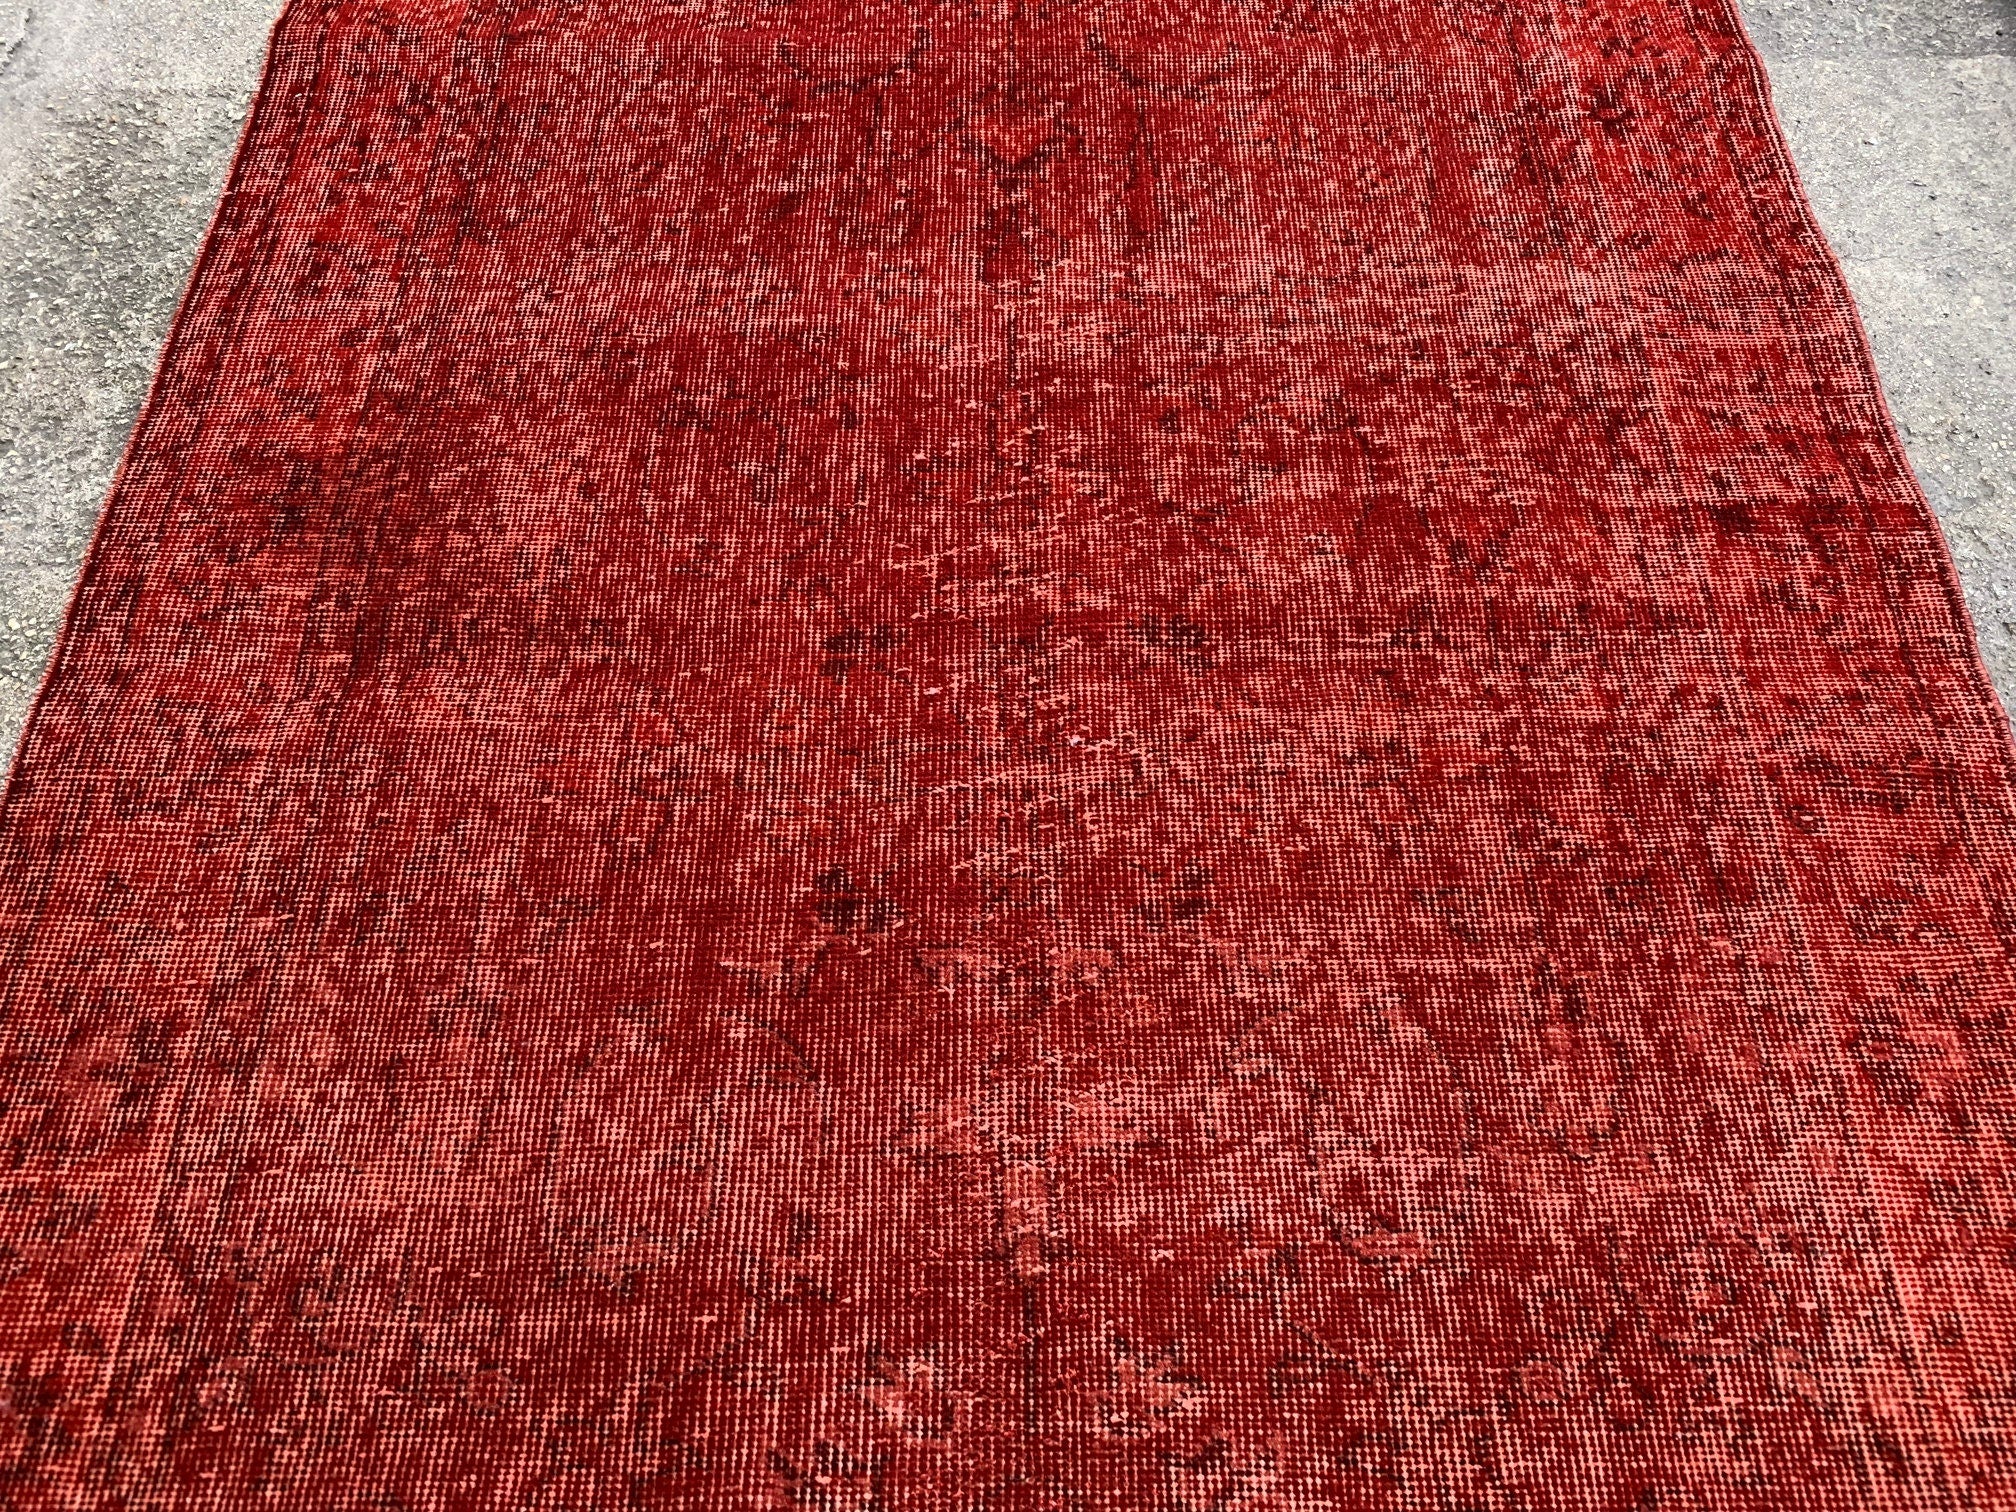 Authentic Turkish carpet, 3.10x6.7 ft, B843